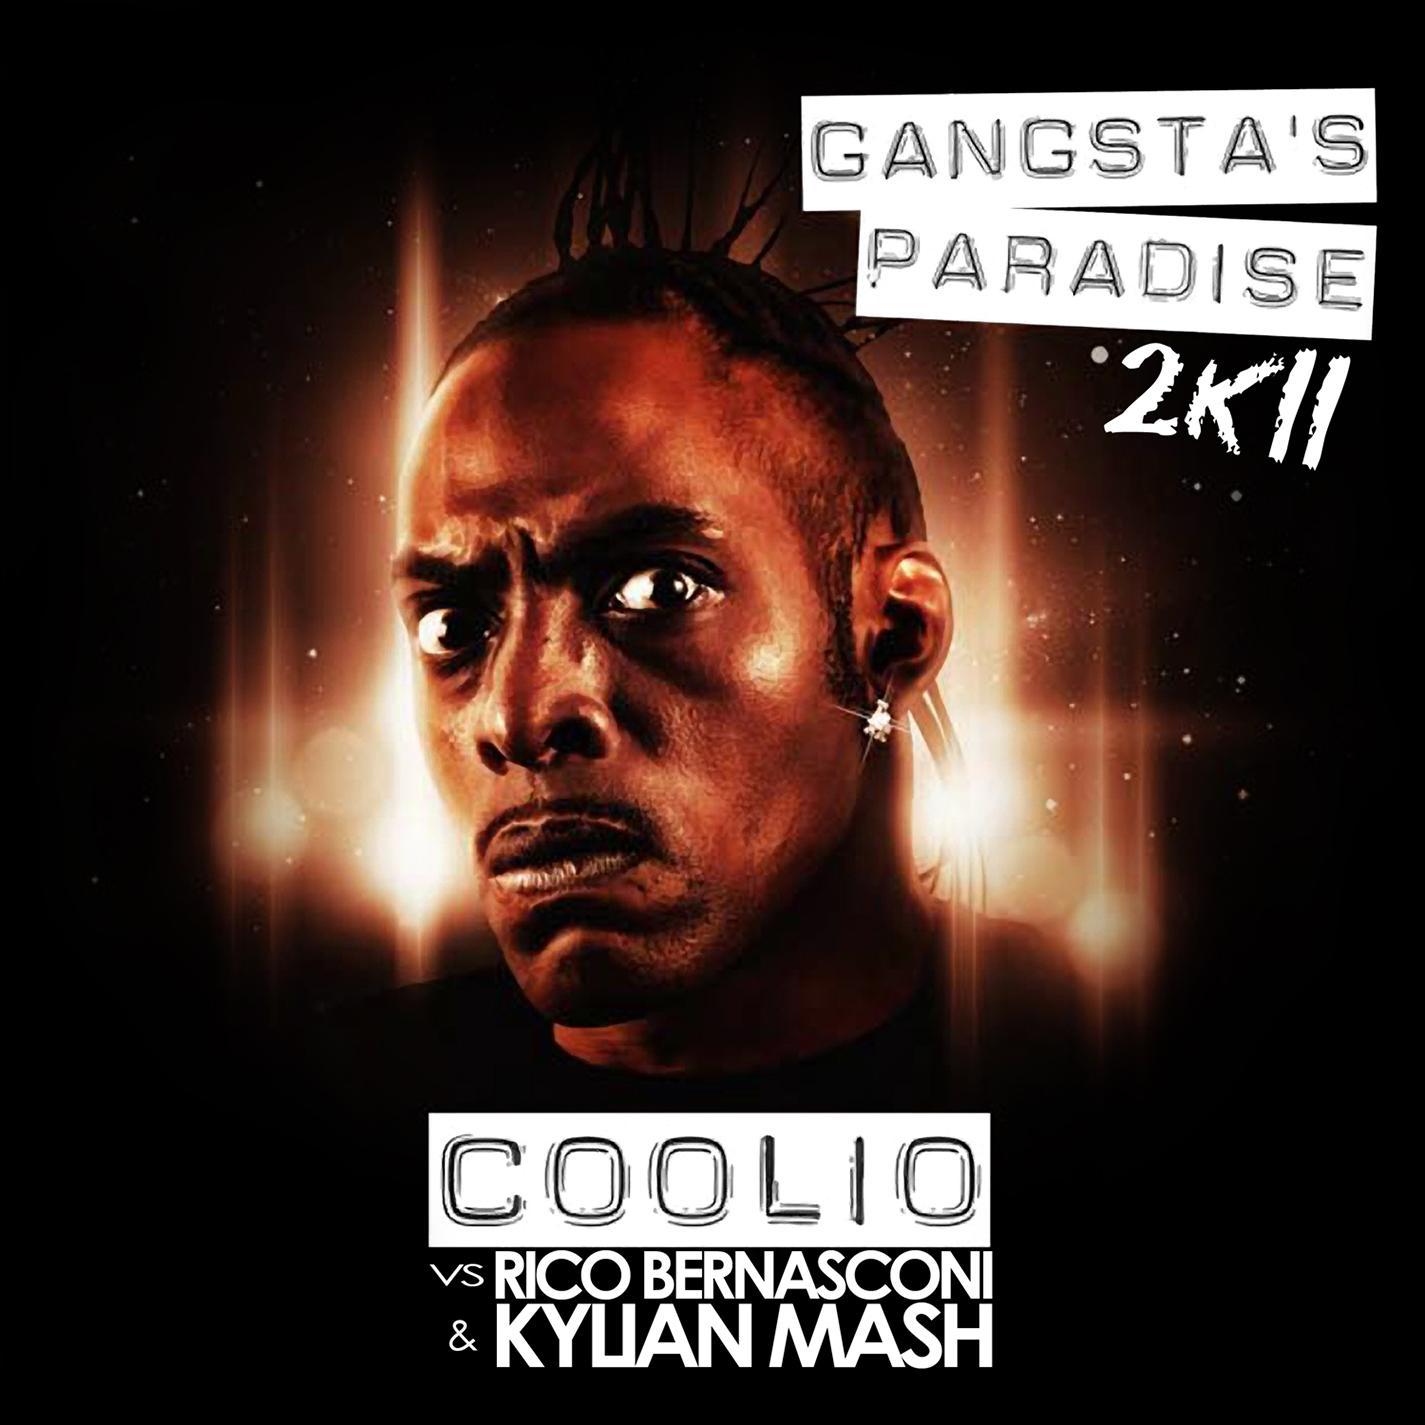 Coolio - Gangsta's Paradise 2k11 (Coolio vs Rico Bernasconi & Kylian Mash) (Splash vs Scotty Club Remix)